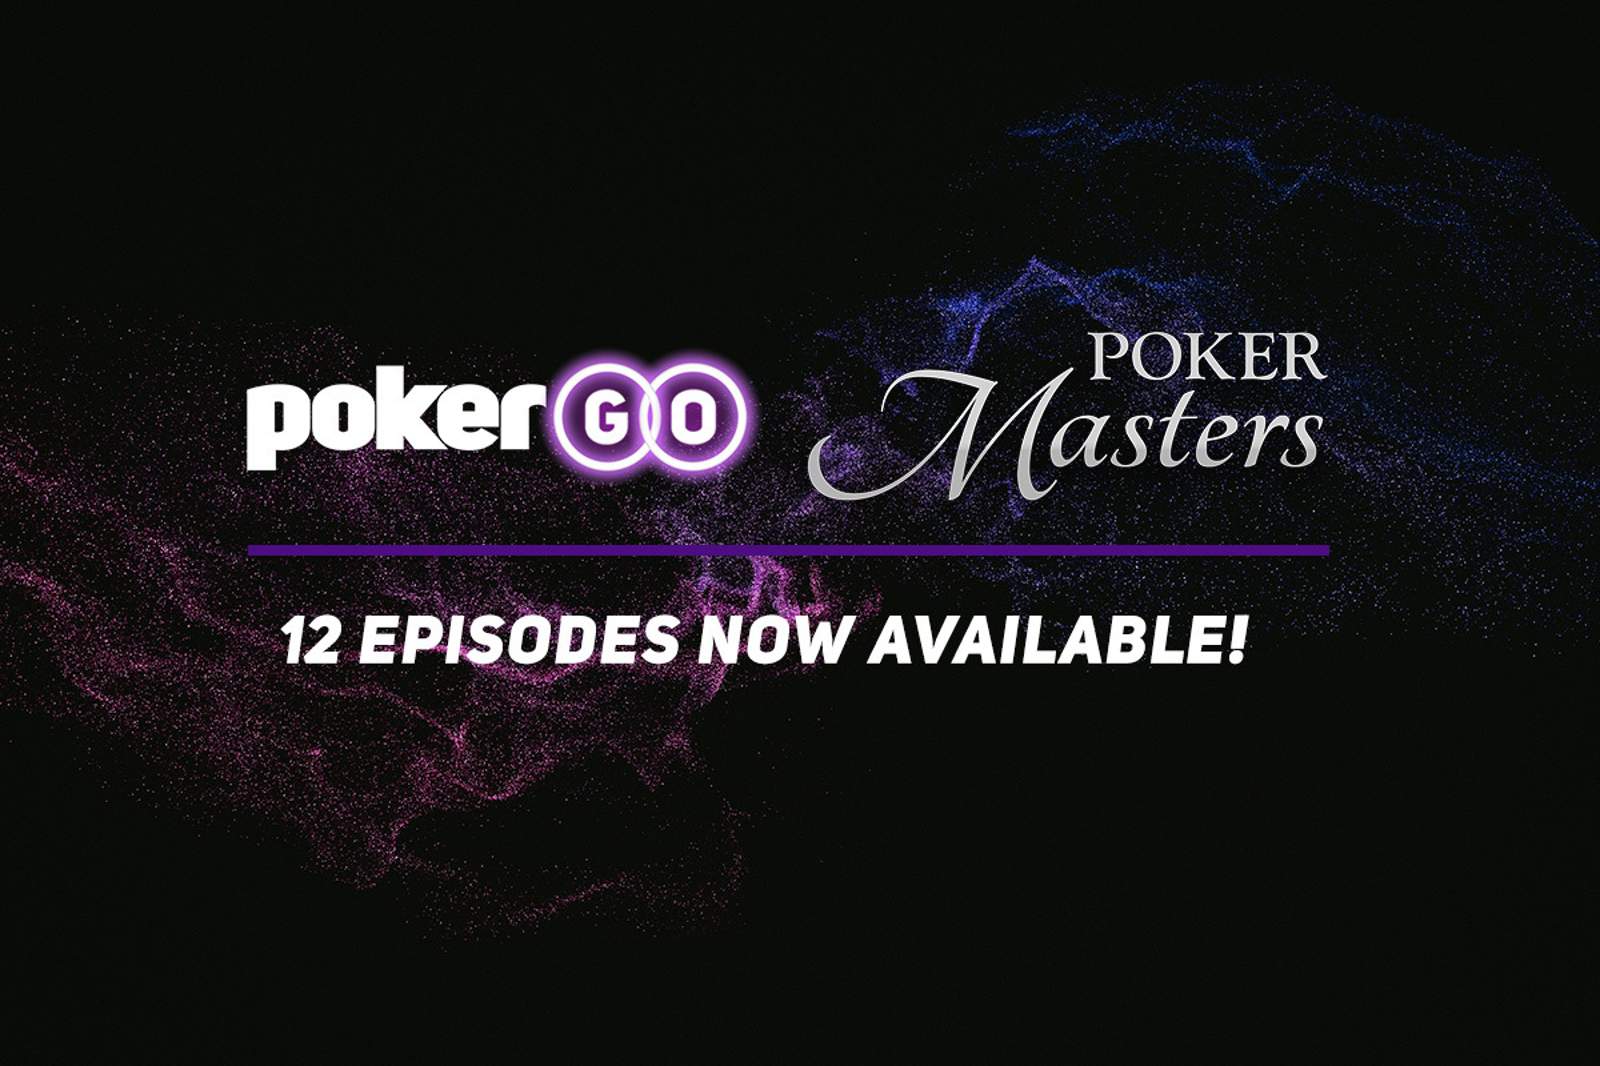 Watch 2021 Poker Masters Episodes on PokerGO Now